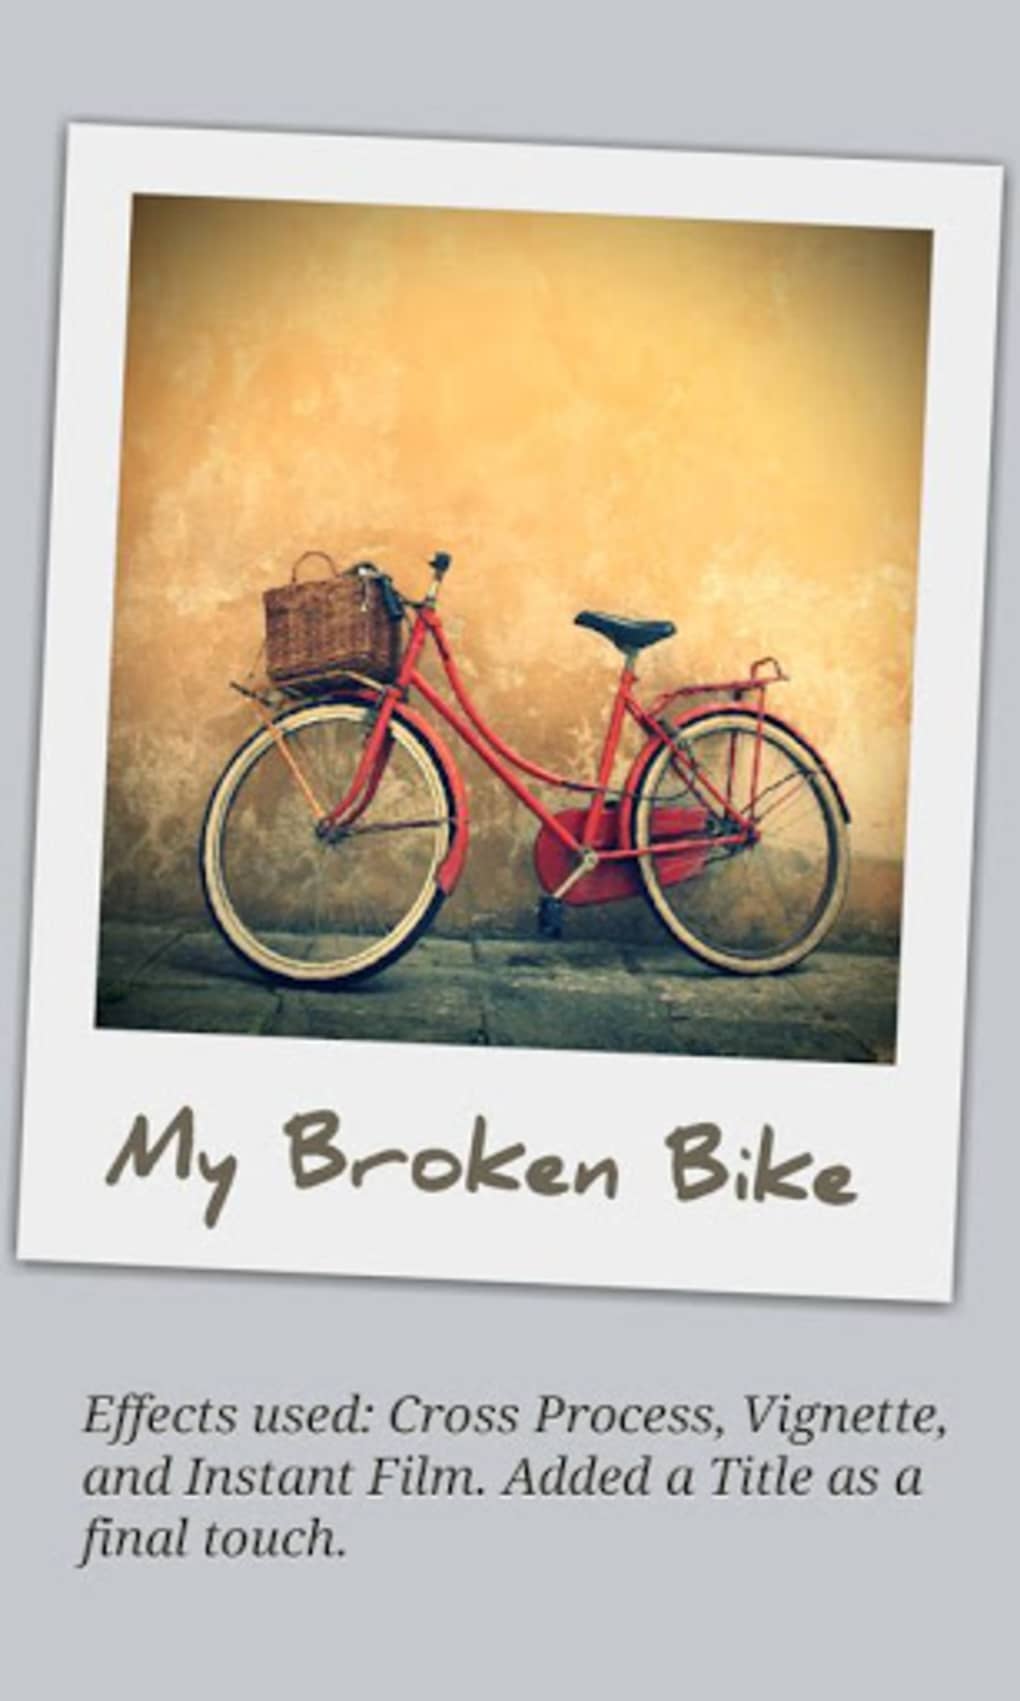 Broke the bike